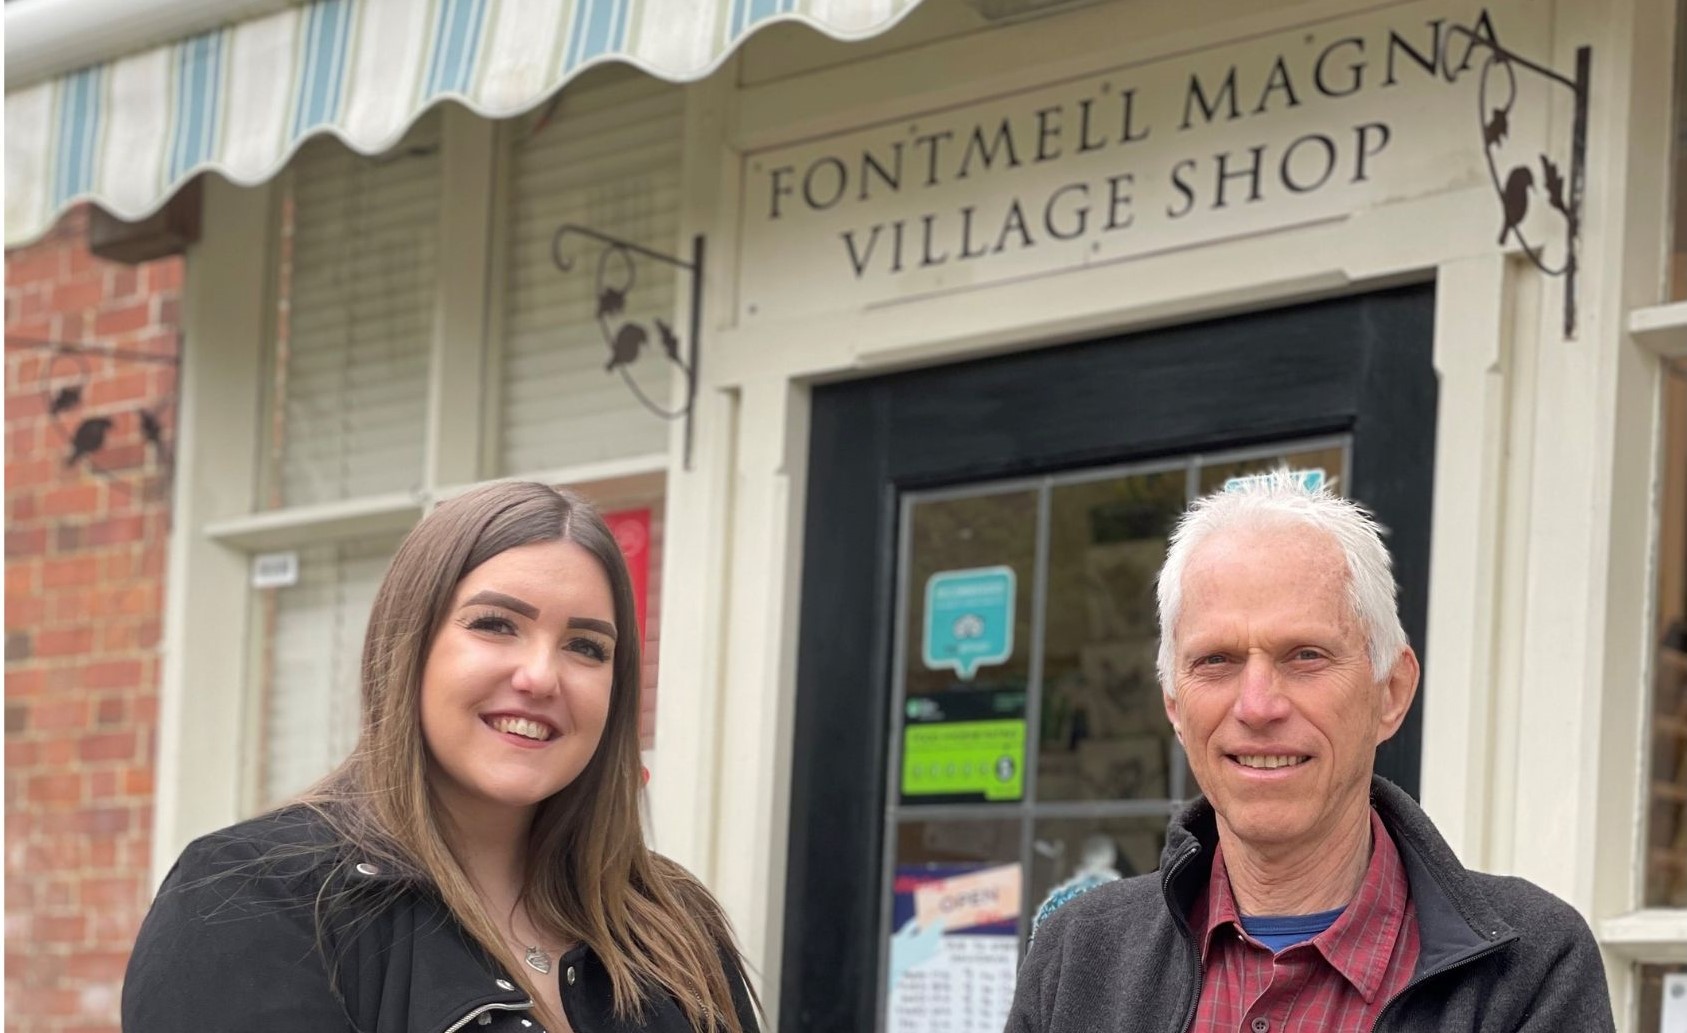 Housebuilder’s £5,000 donation helps save village shop in Fontmell Magna